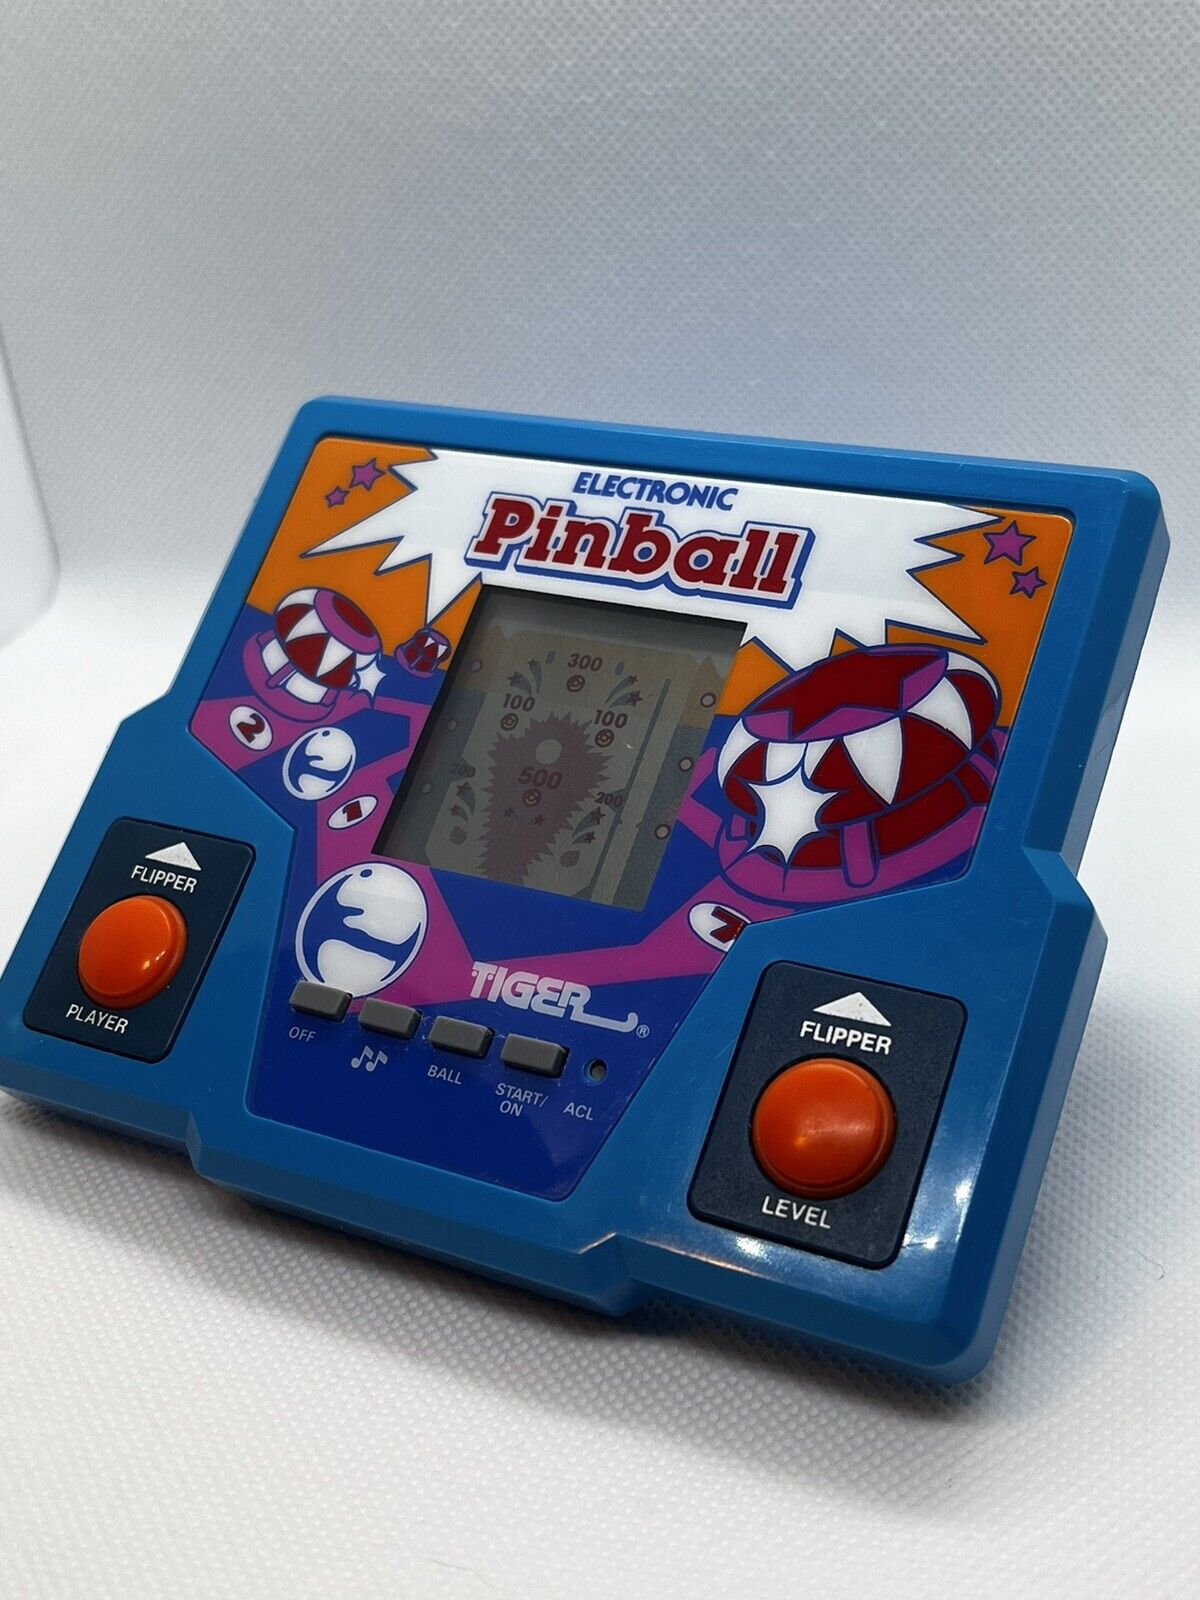 Tiger Electronic Pinball Handheld Video Game (1987) Vintage Lcd Tested & Working